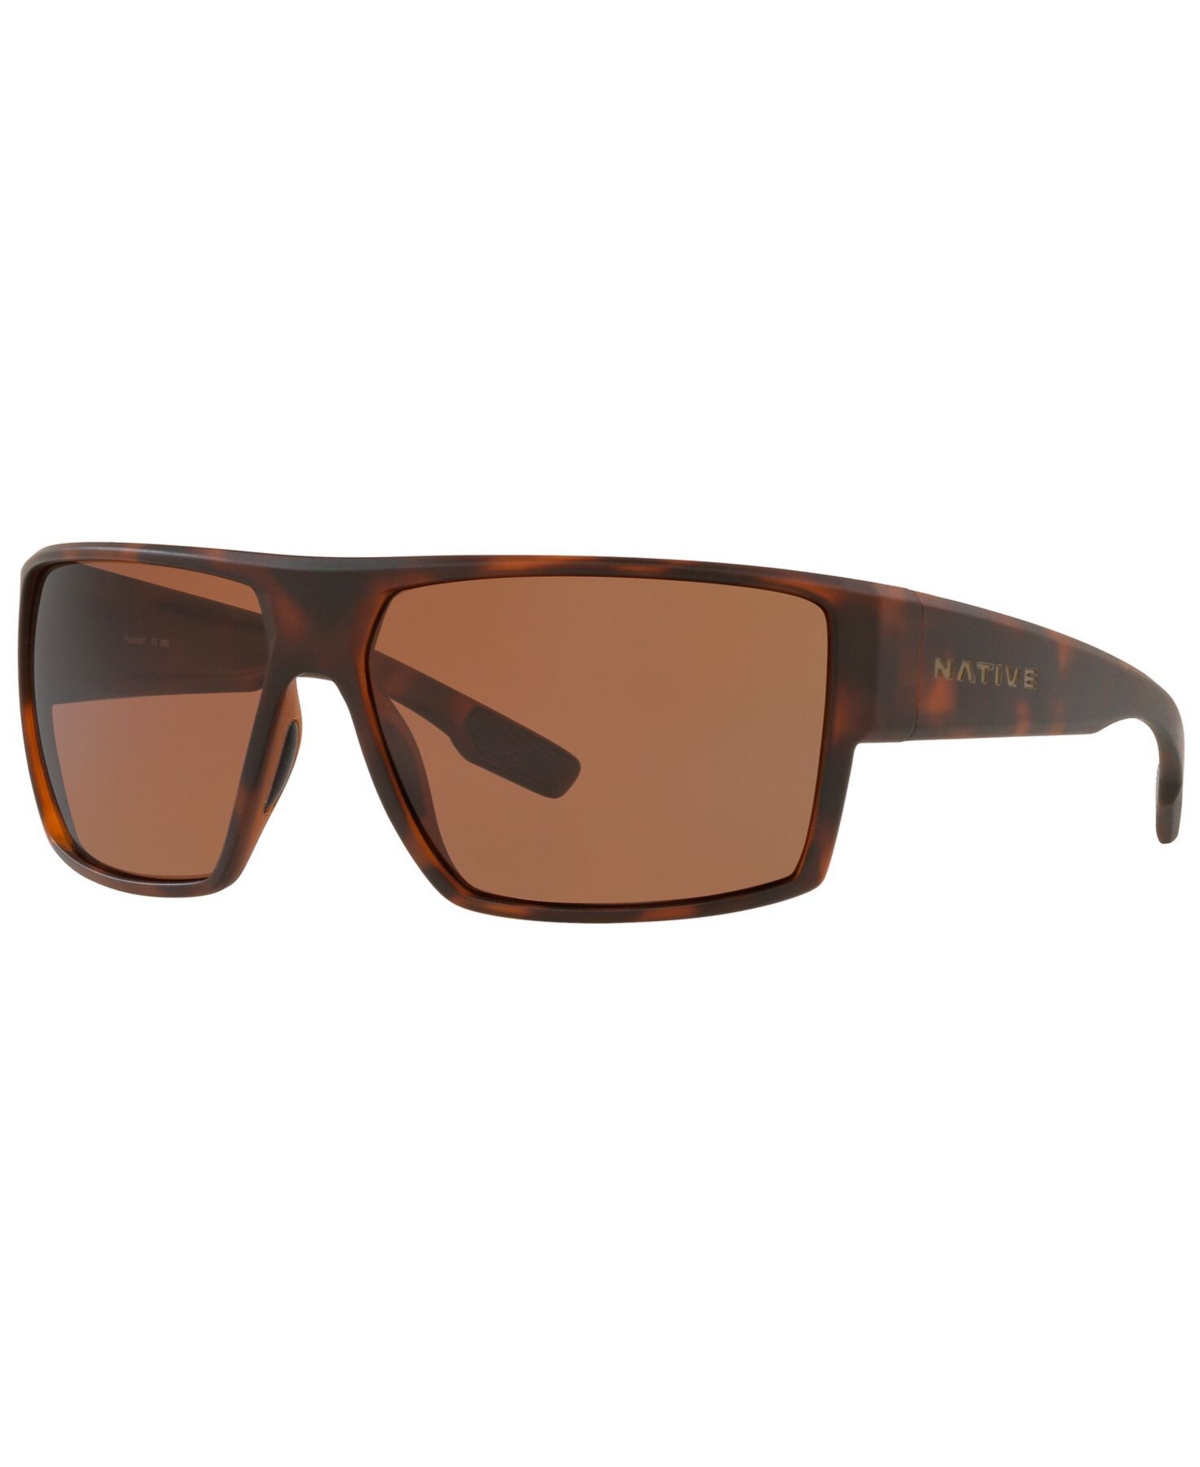 Native Eyewear Native Men's Polarized Sunglasses, Xd9013 In Desert Tortoise,brown